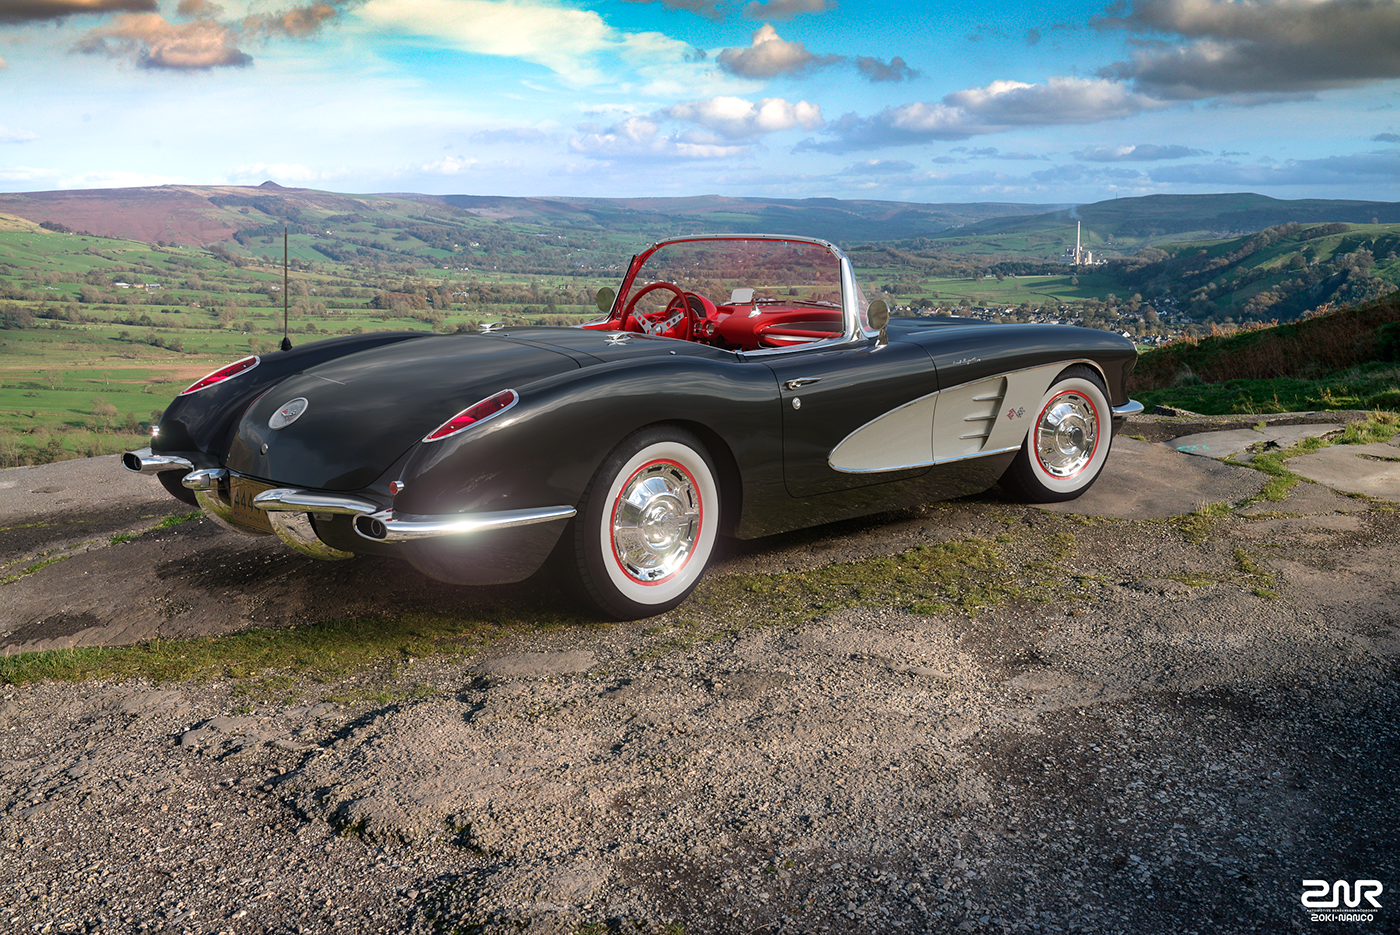 #3d #cg #cgi #render #chevrolet #corvette #c1 #1960 #racing #custom #unique #track #wide #performance #road #luxury #vintage #classic #timeless